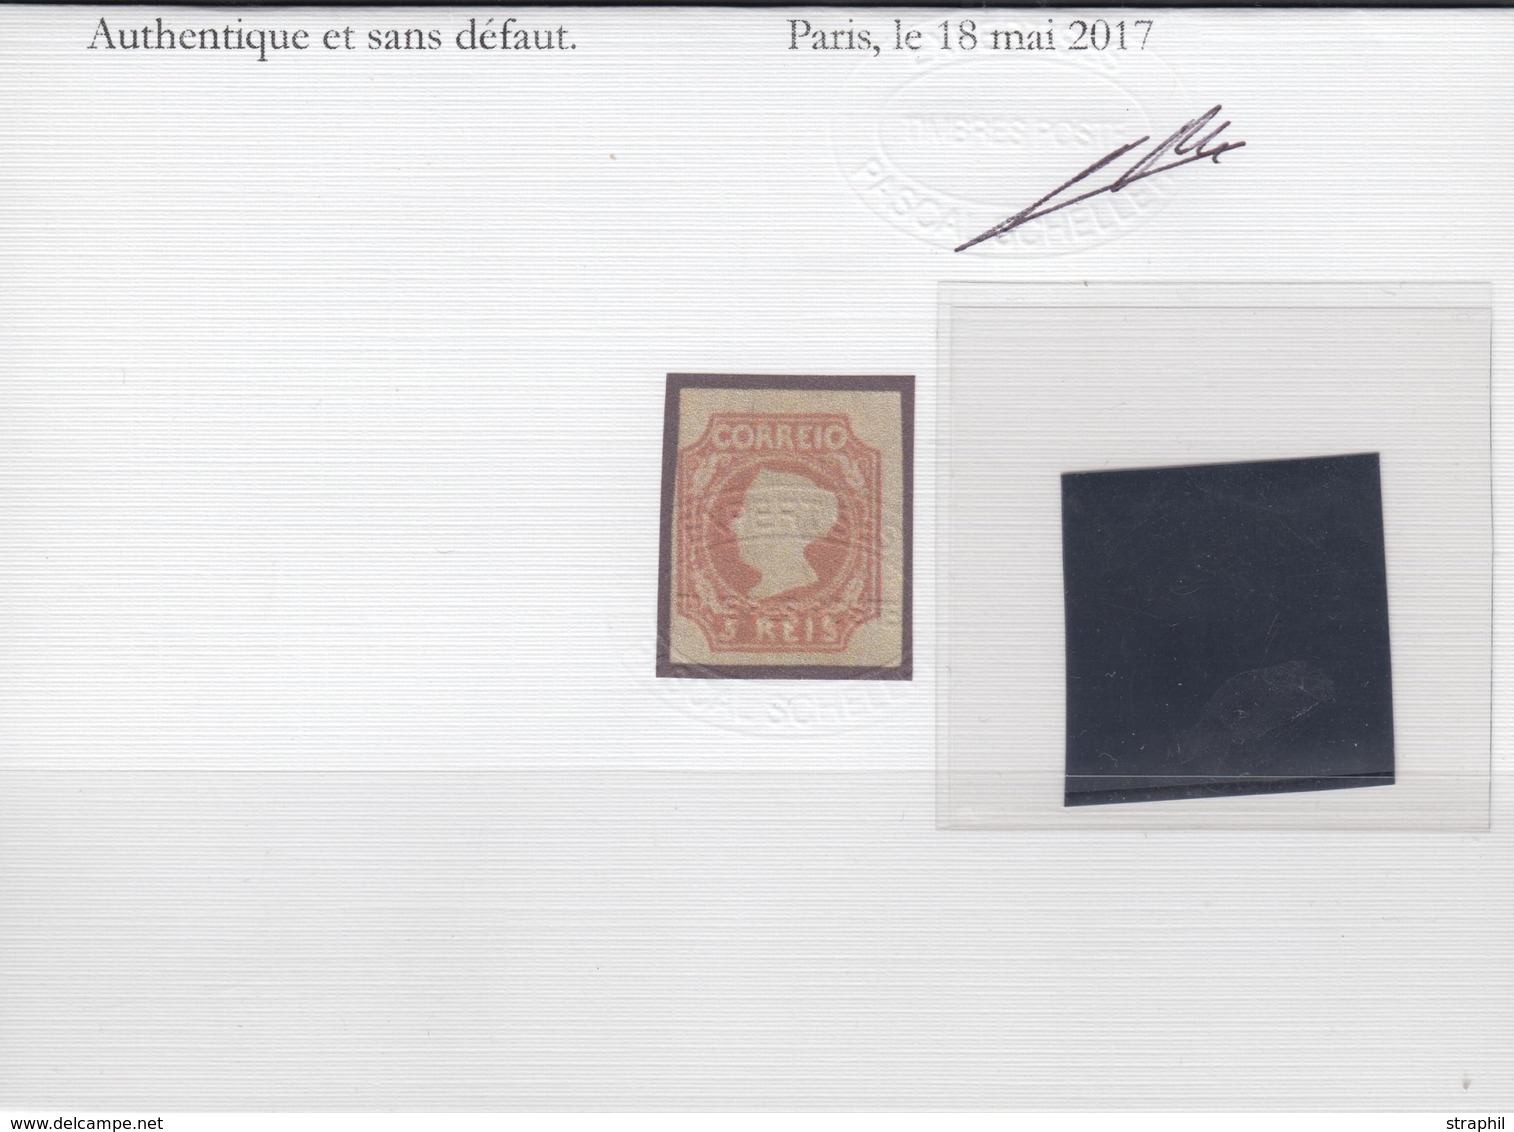 * N°1 - 5r Brun Jaune - Gomme Brunâtre - Certif. Scheller - TB - Unused Stamps